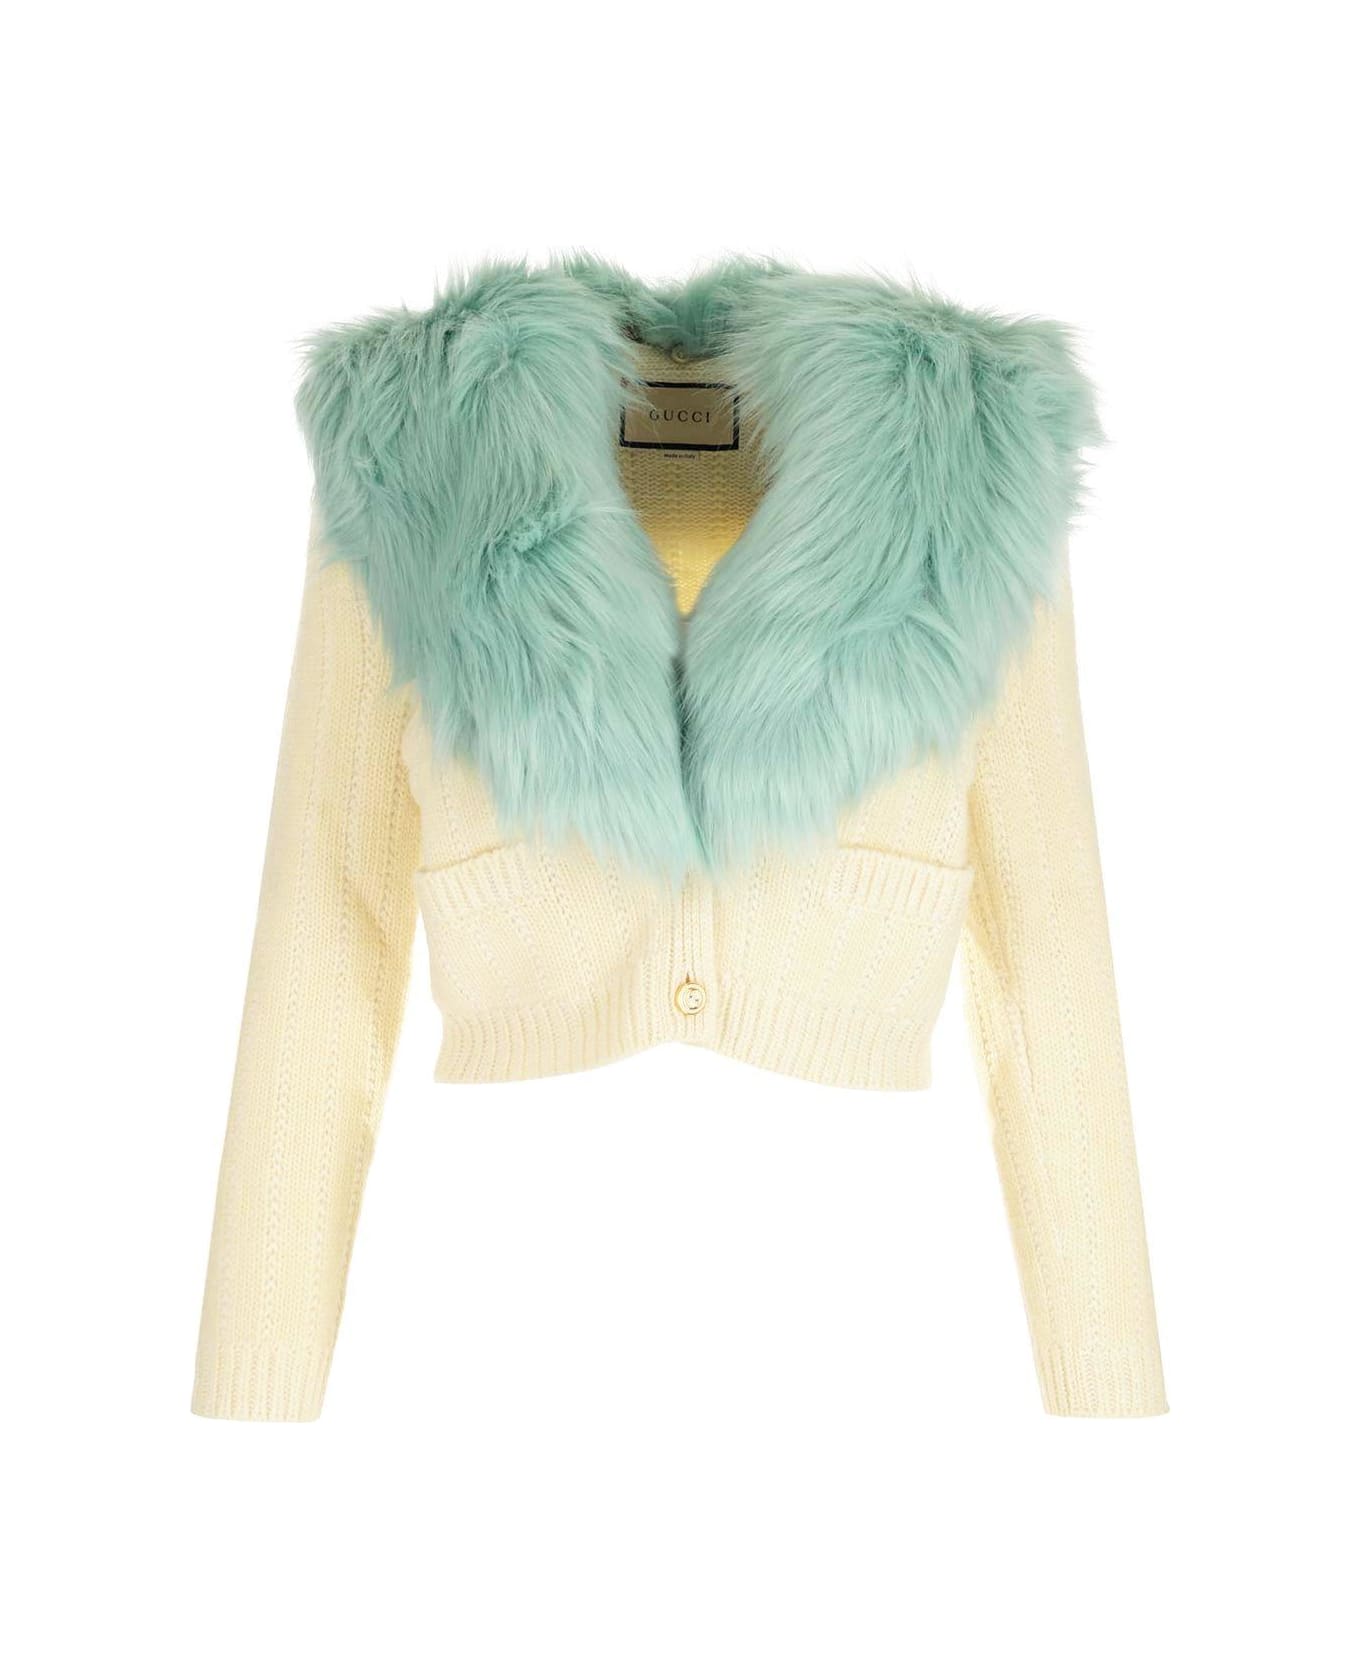 Gucci Faux Fur Buttoned Cardigan - LIGHT BLUE